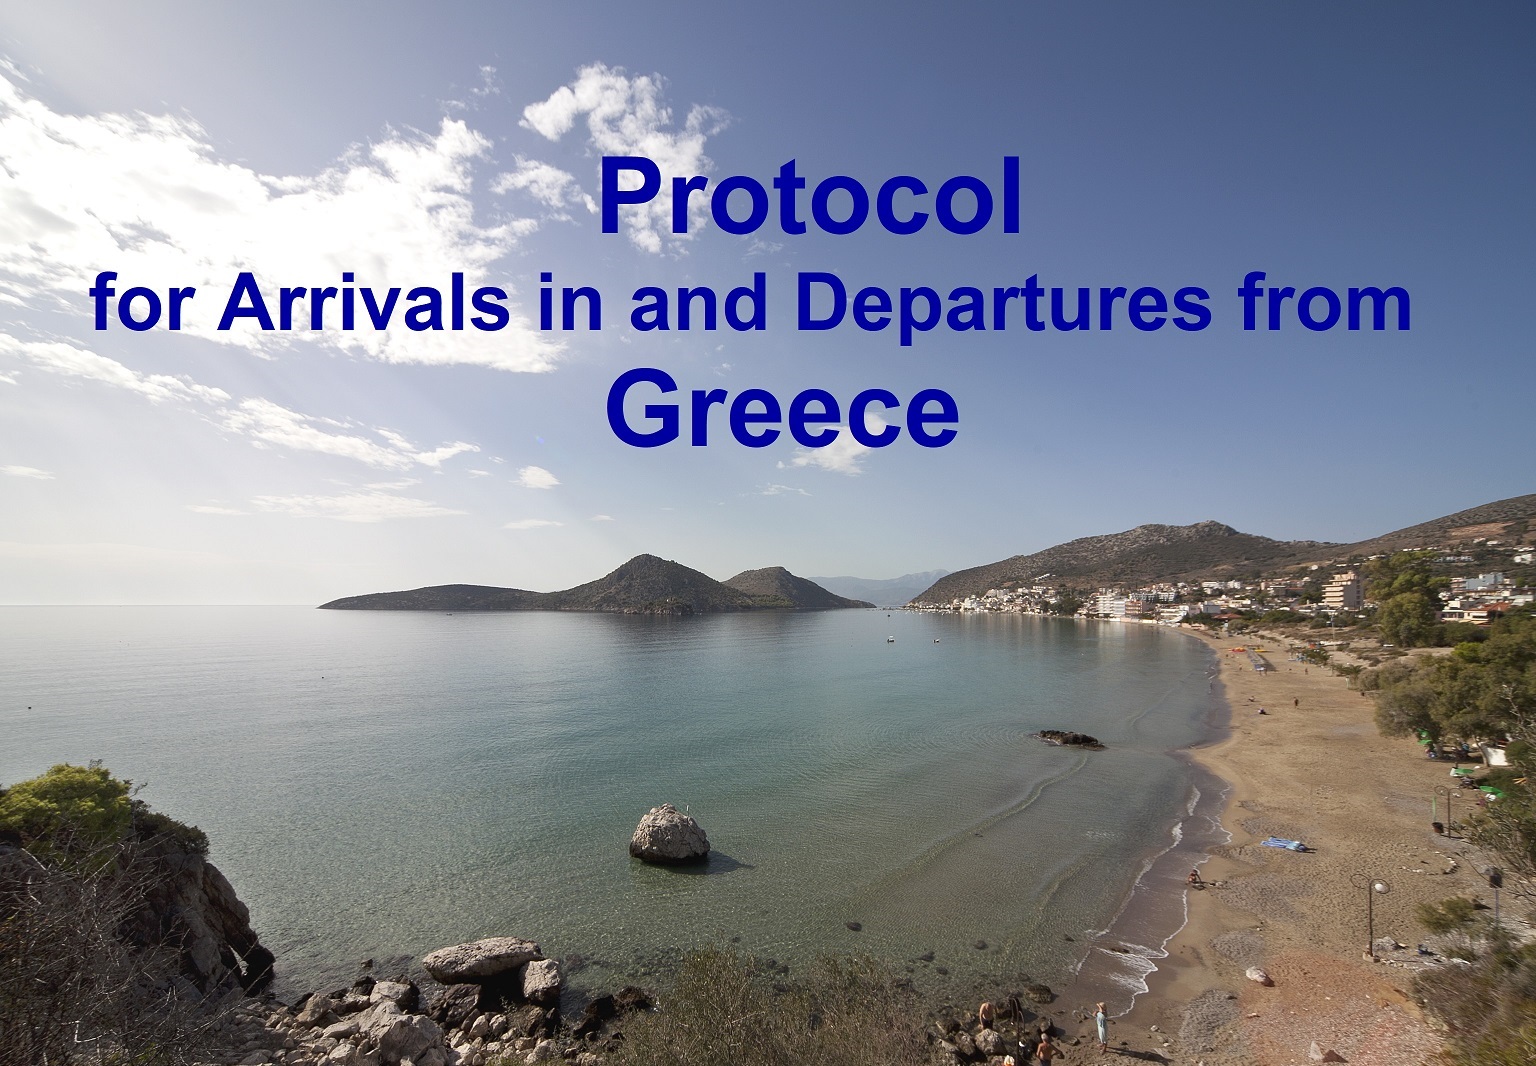 Using the Travelgovgr Visit Greece App for Arrivals